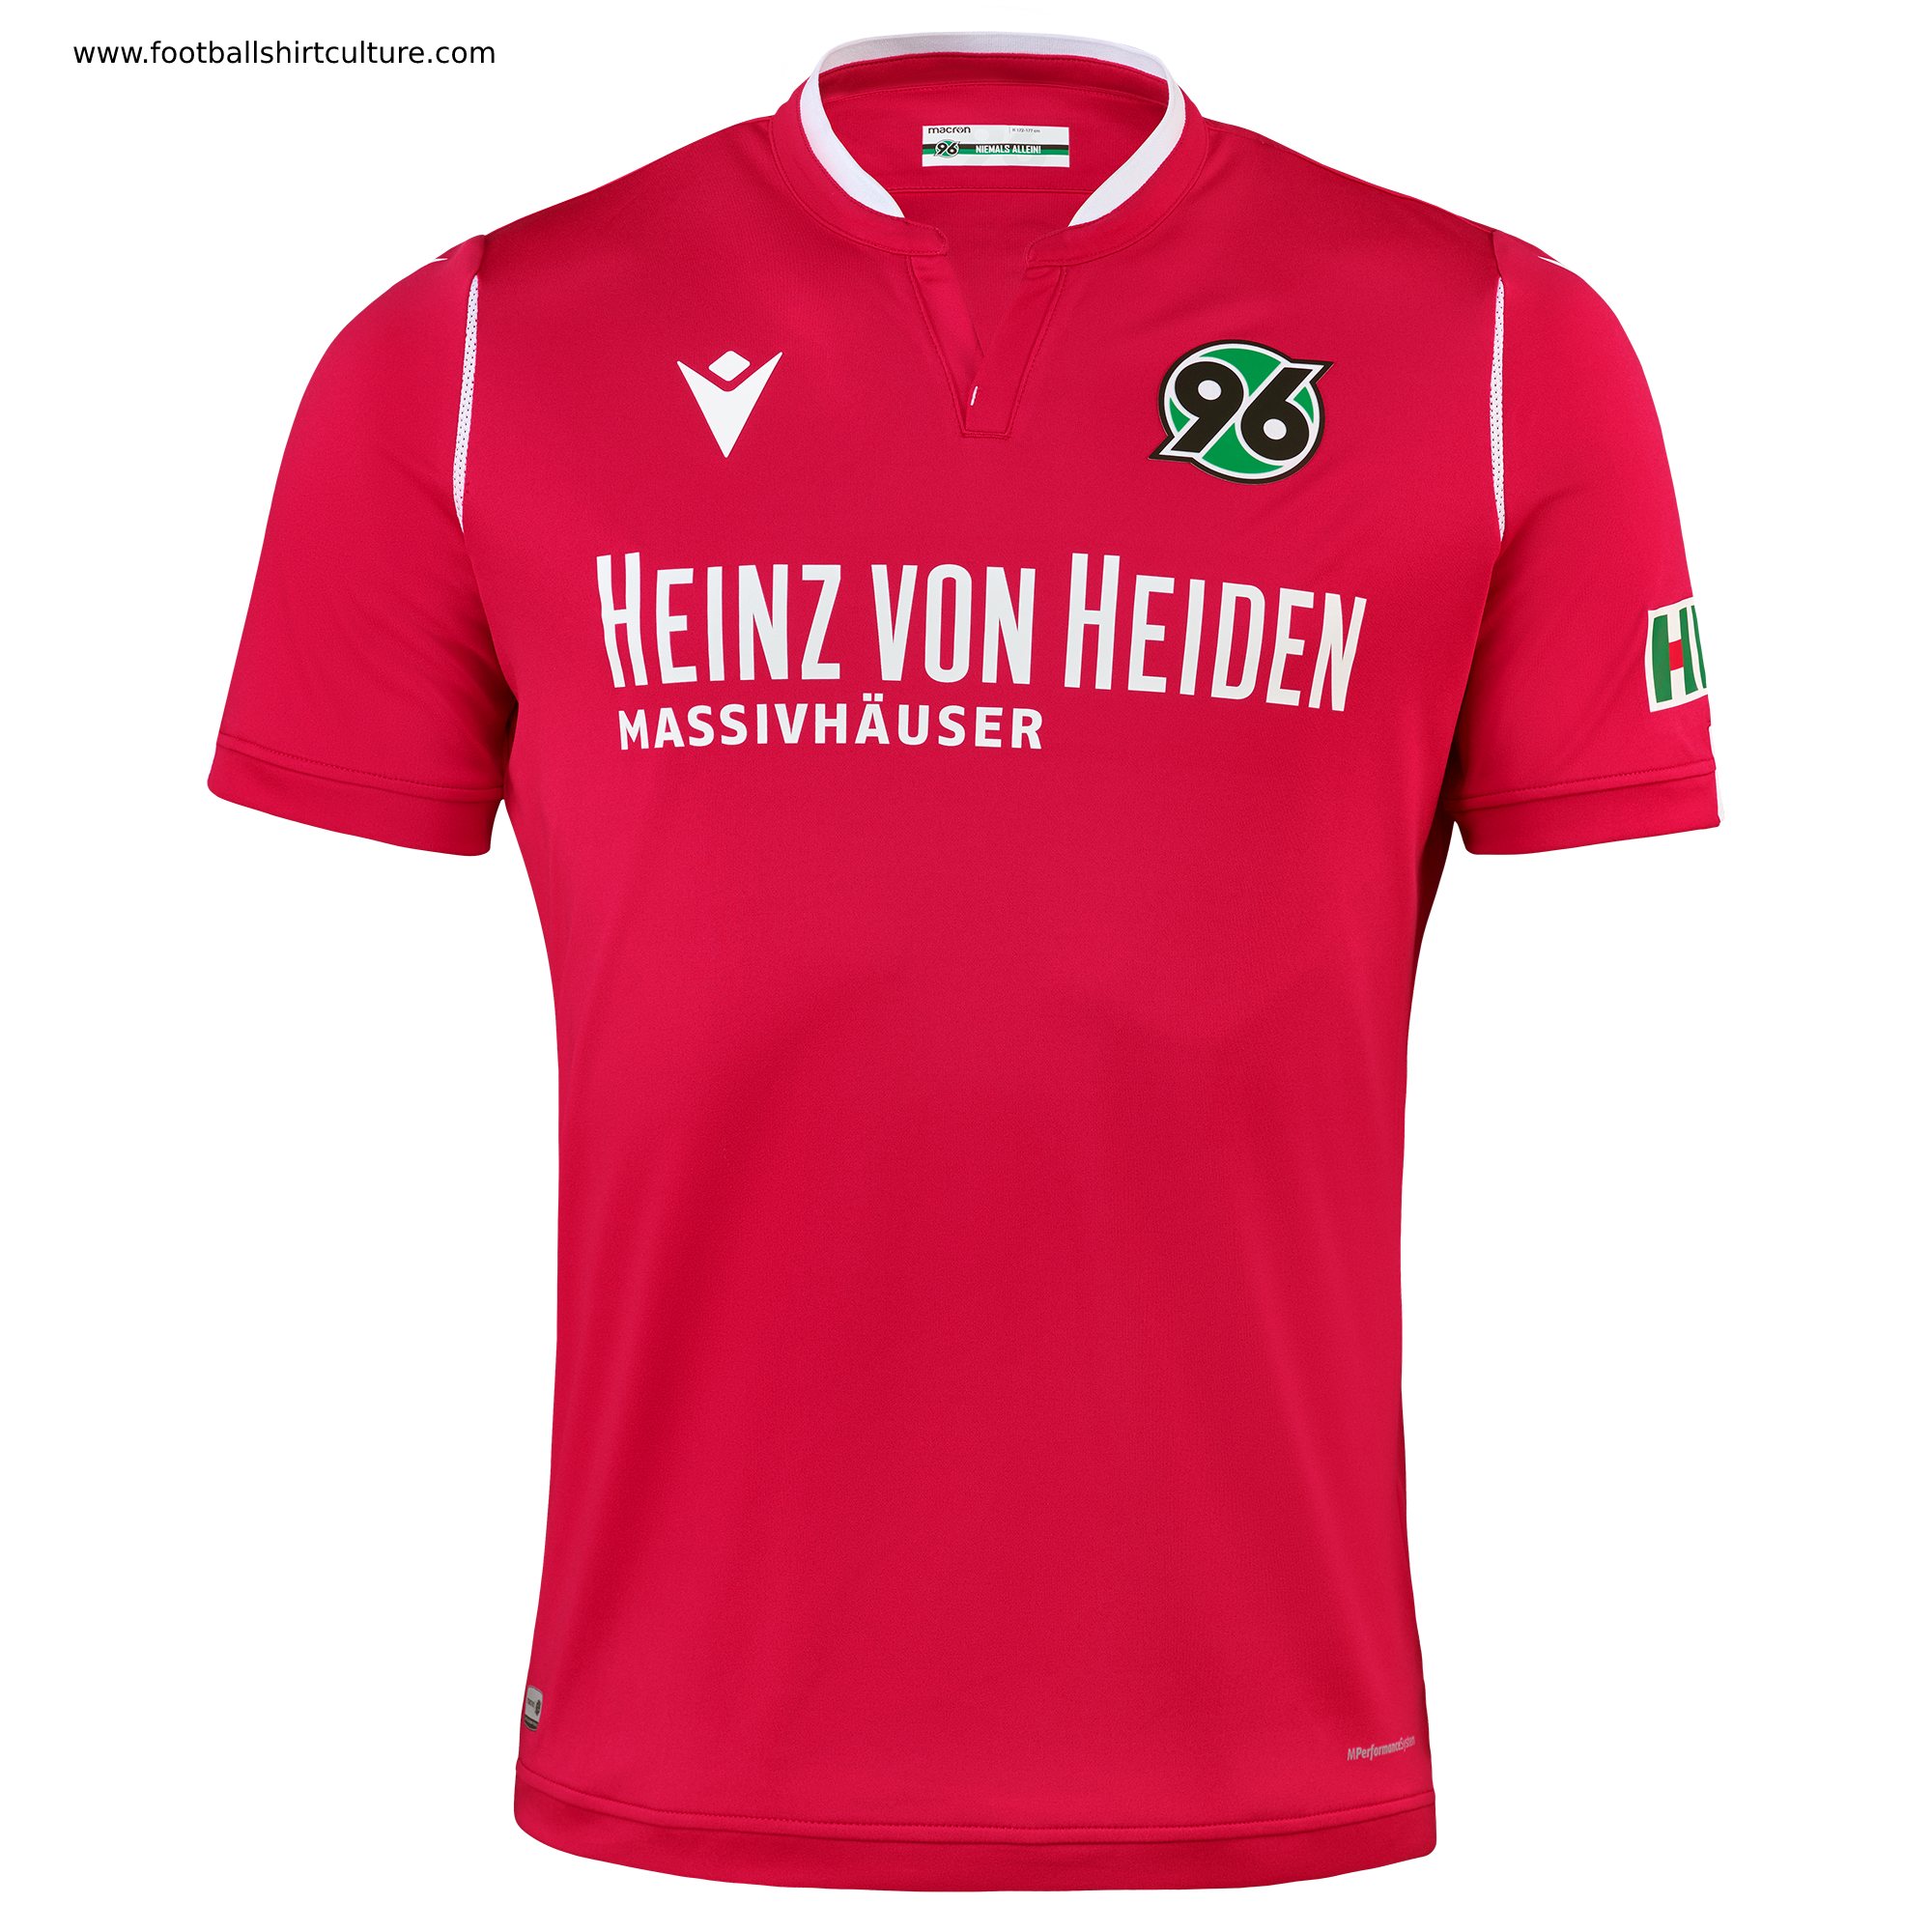 Hannover 96 Trikot 164 14Y football shirt jersey maillot maglia camiseta rot H96 